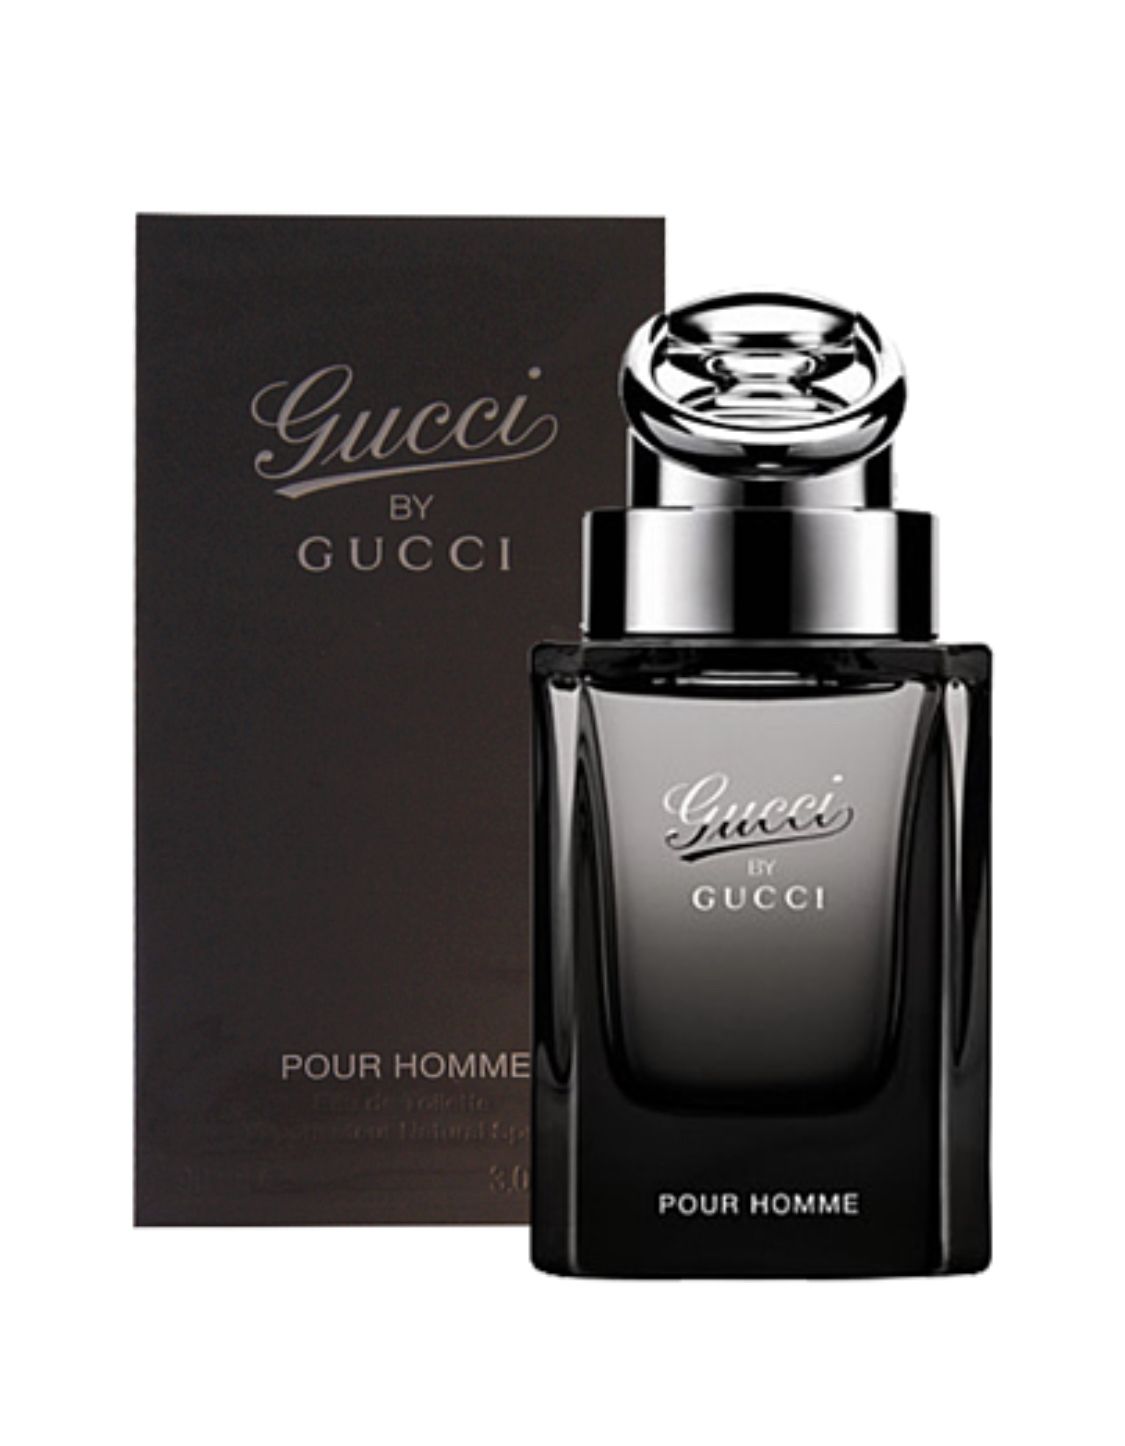 Туалетная вода gucci pour homme. Туалетная вода Gucci Gucci by Gucci pour homme. Gucci "Gucci by Gucci pour homme". Gucci by Gucci pour homme 90ml. Gucci by Gucci pour homme 90 мл.